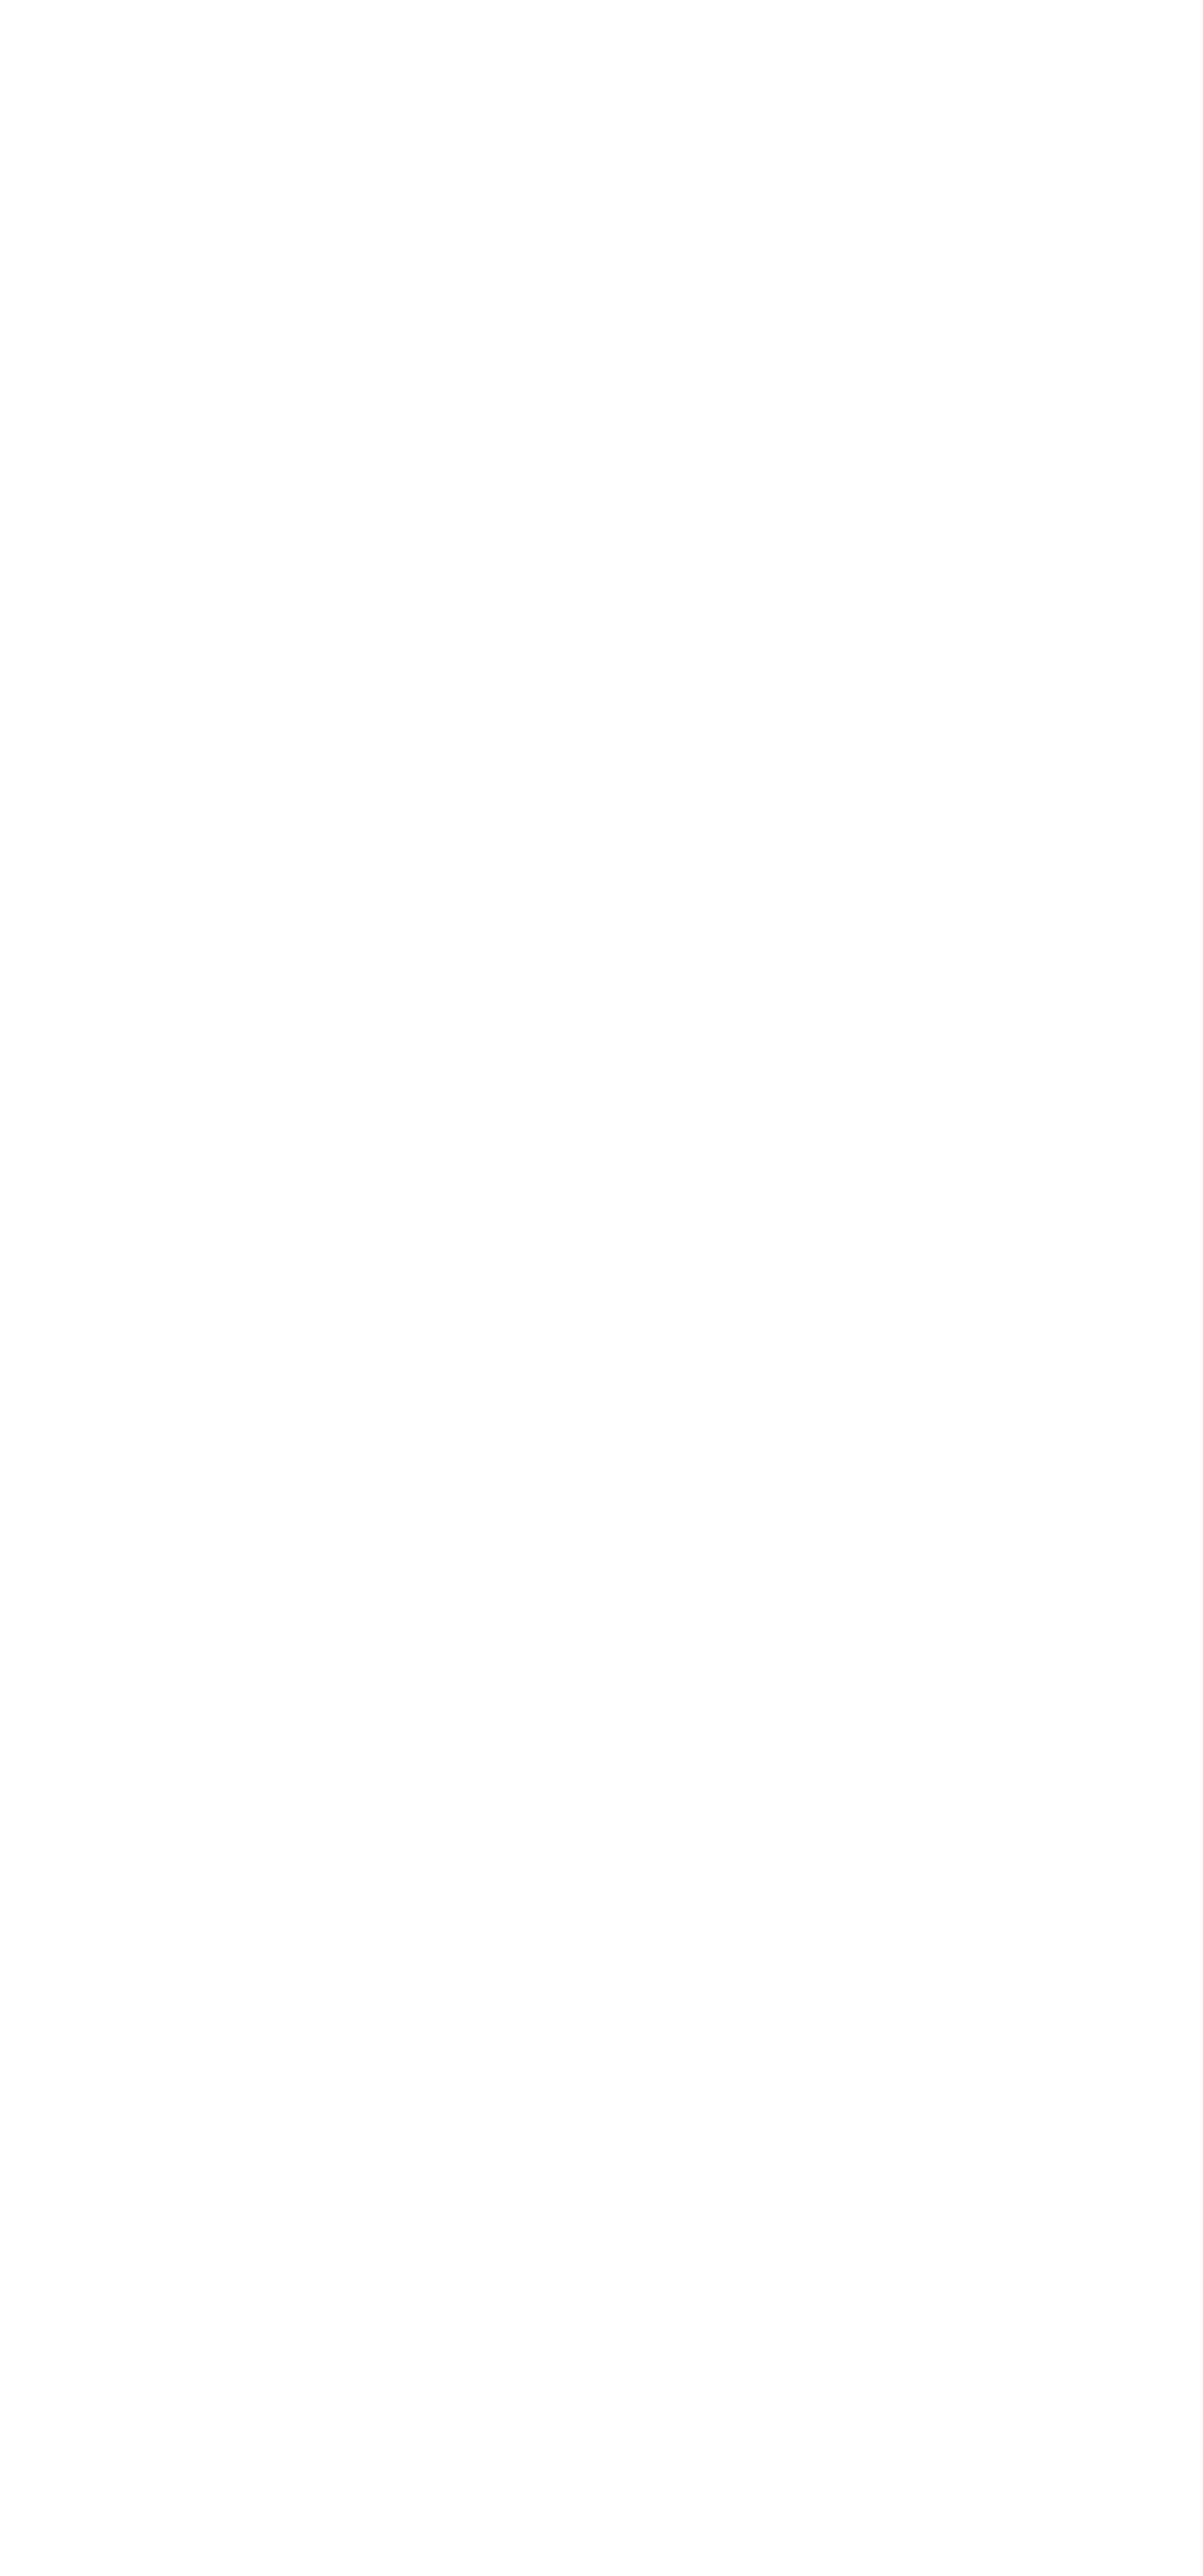 MongoDB logo for dark backgrounds (transparent PNG)